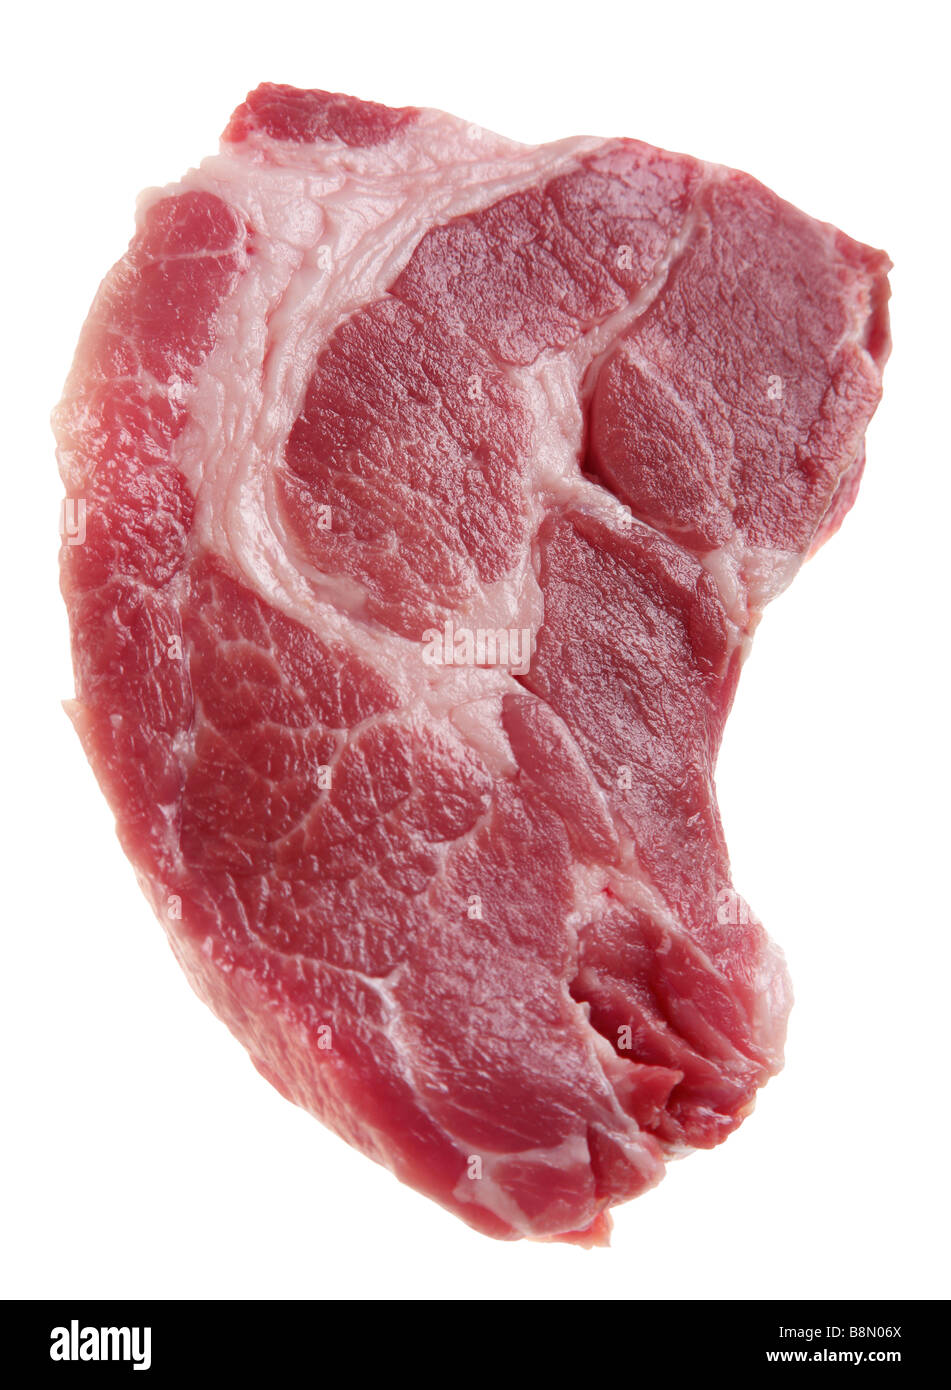 Pork steak meat closeup on white background Stock Photo